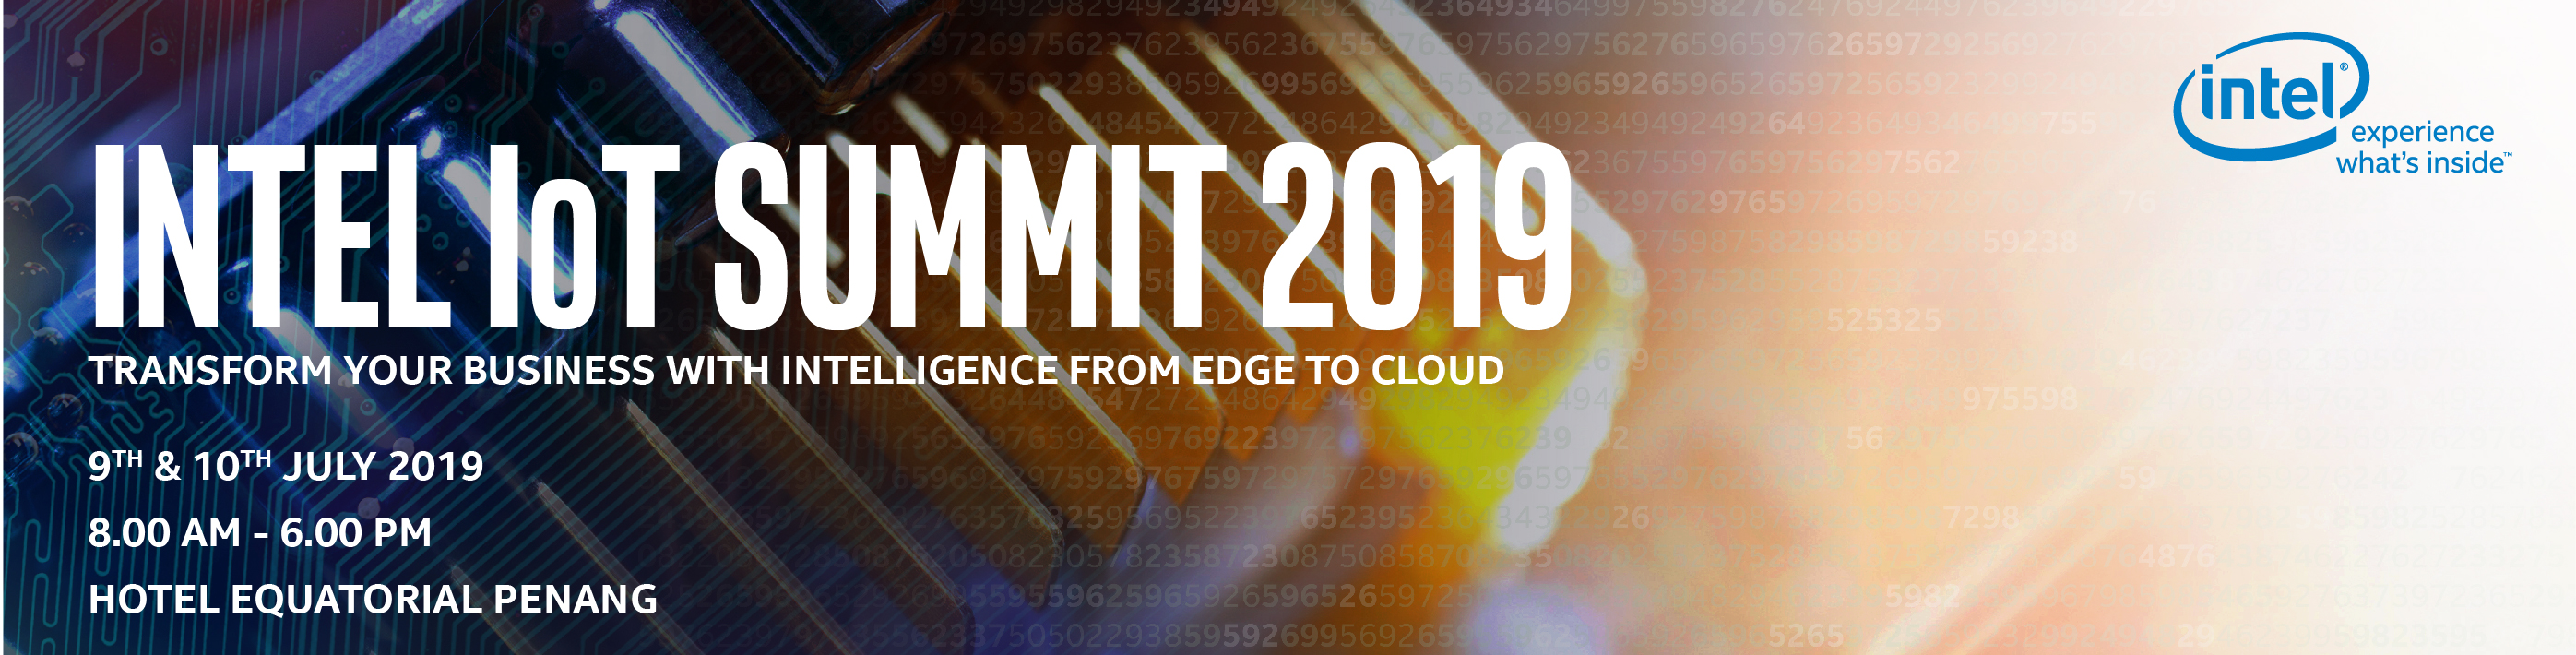 Intel IoT Summit 2019